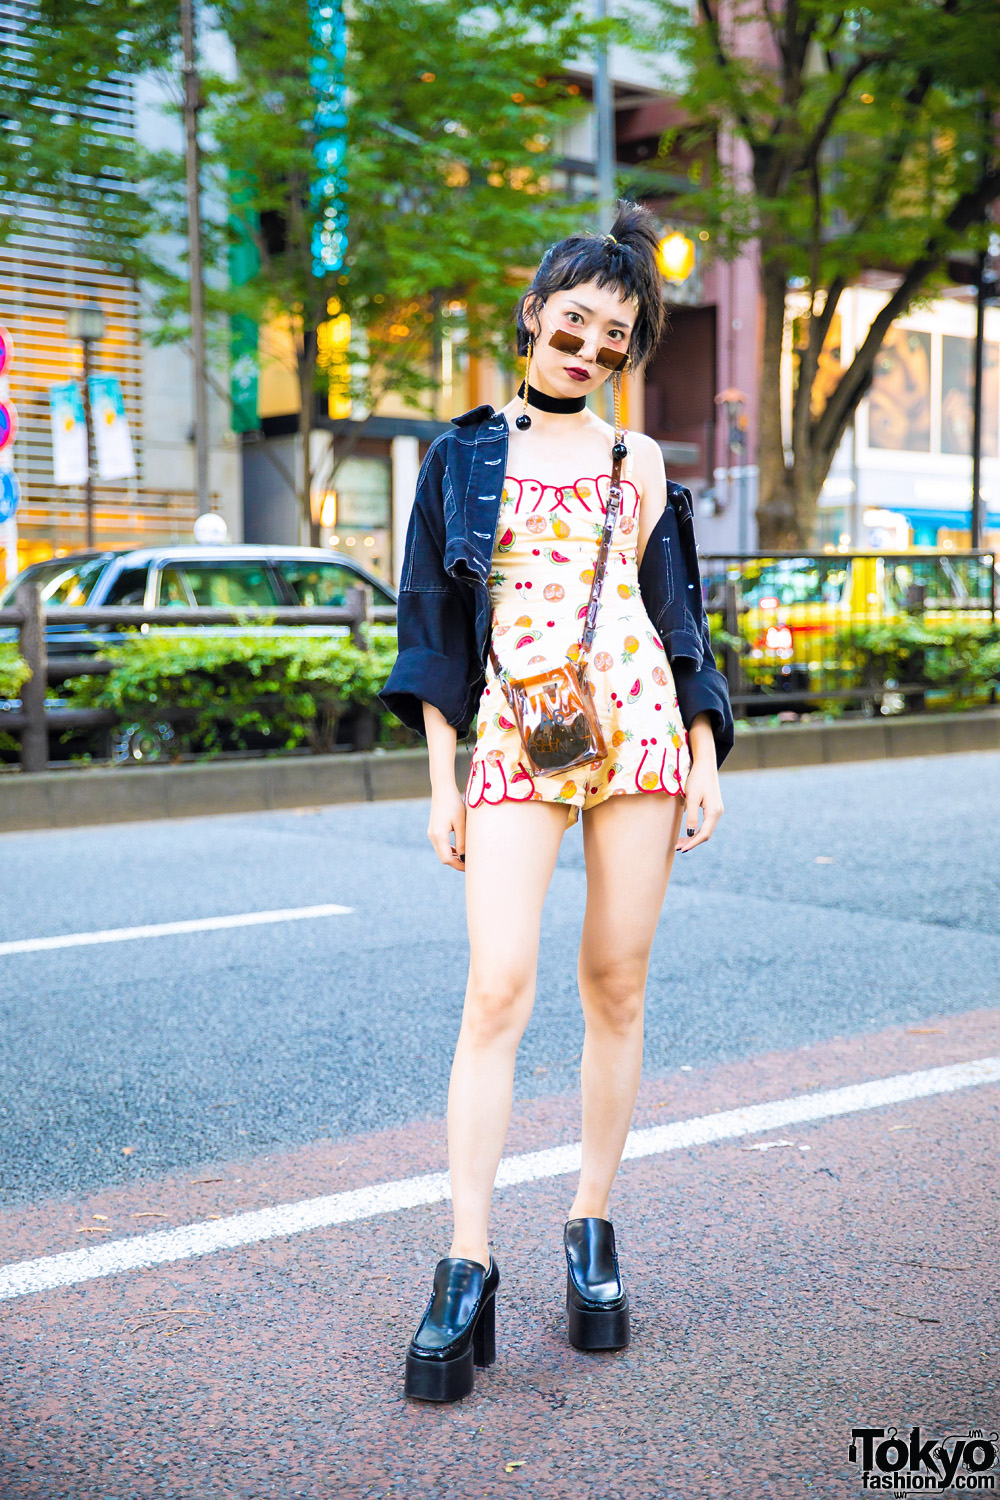 Harajuku Girl in Fruit Print Romper, Denim Jacket & Black Platform Boots